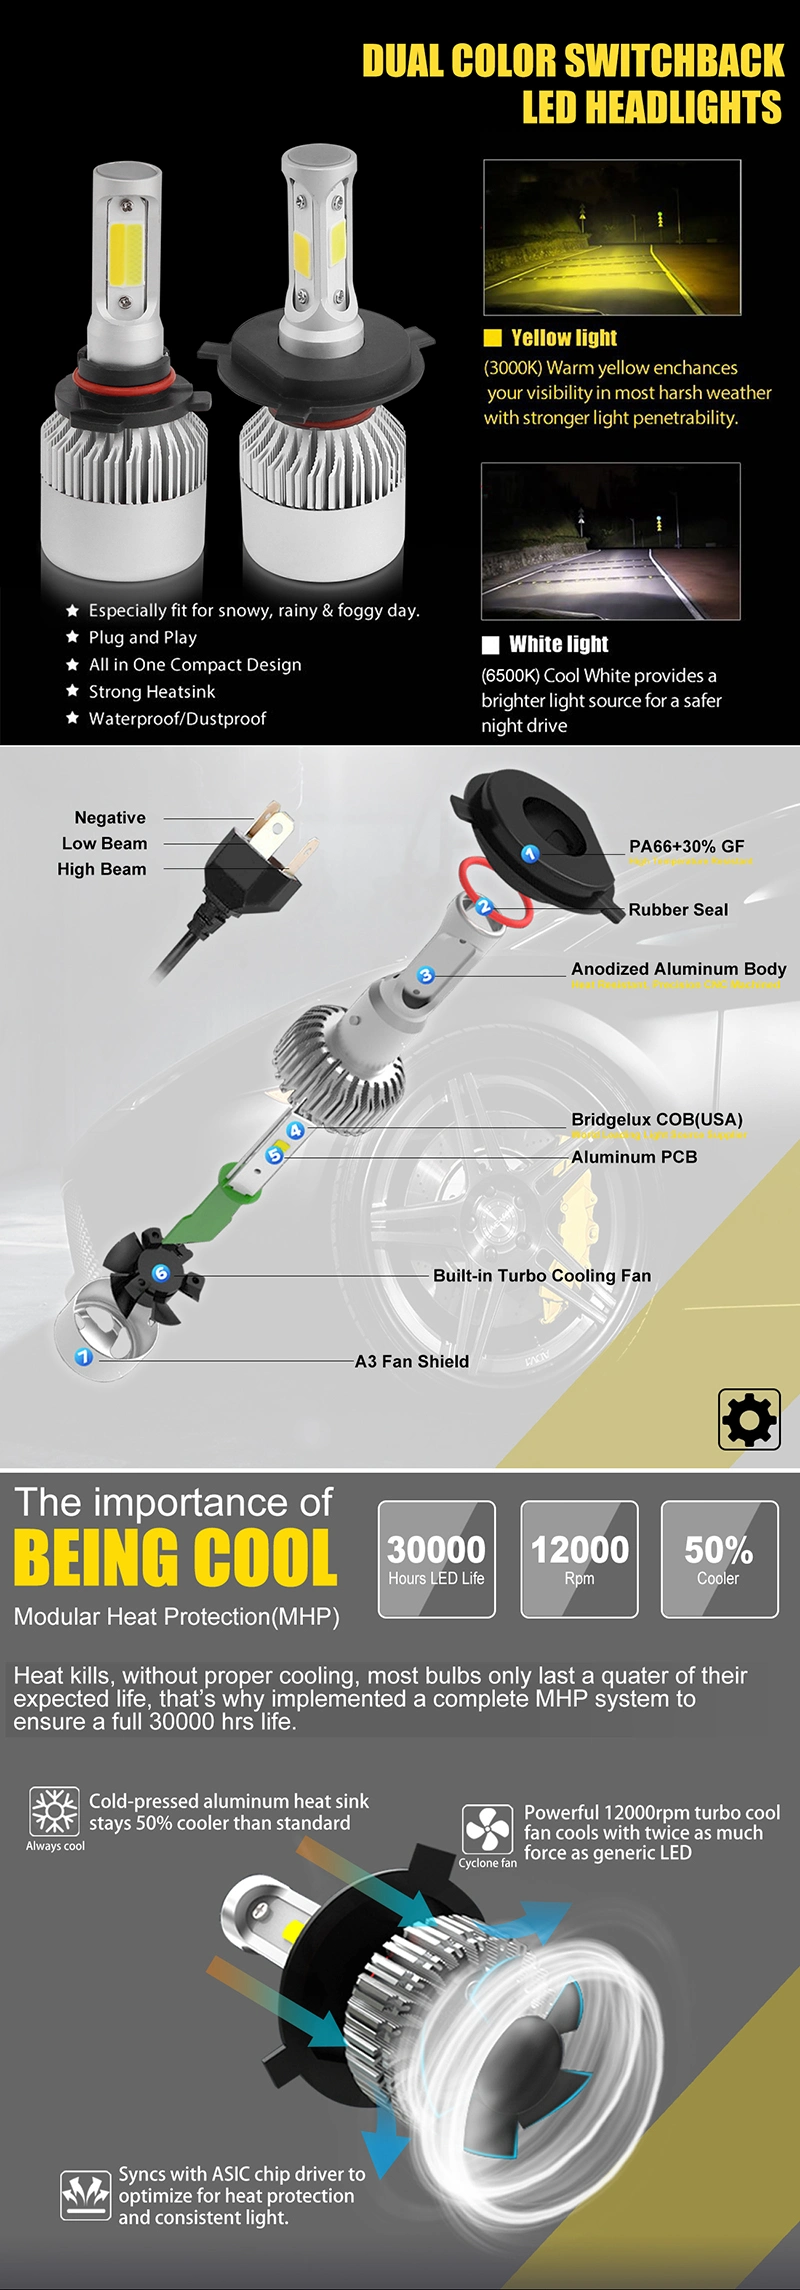 Best LED Automotive Bulbs H7 H11 16000 Lumen LED Headlight H4